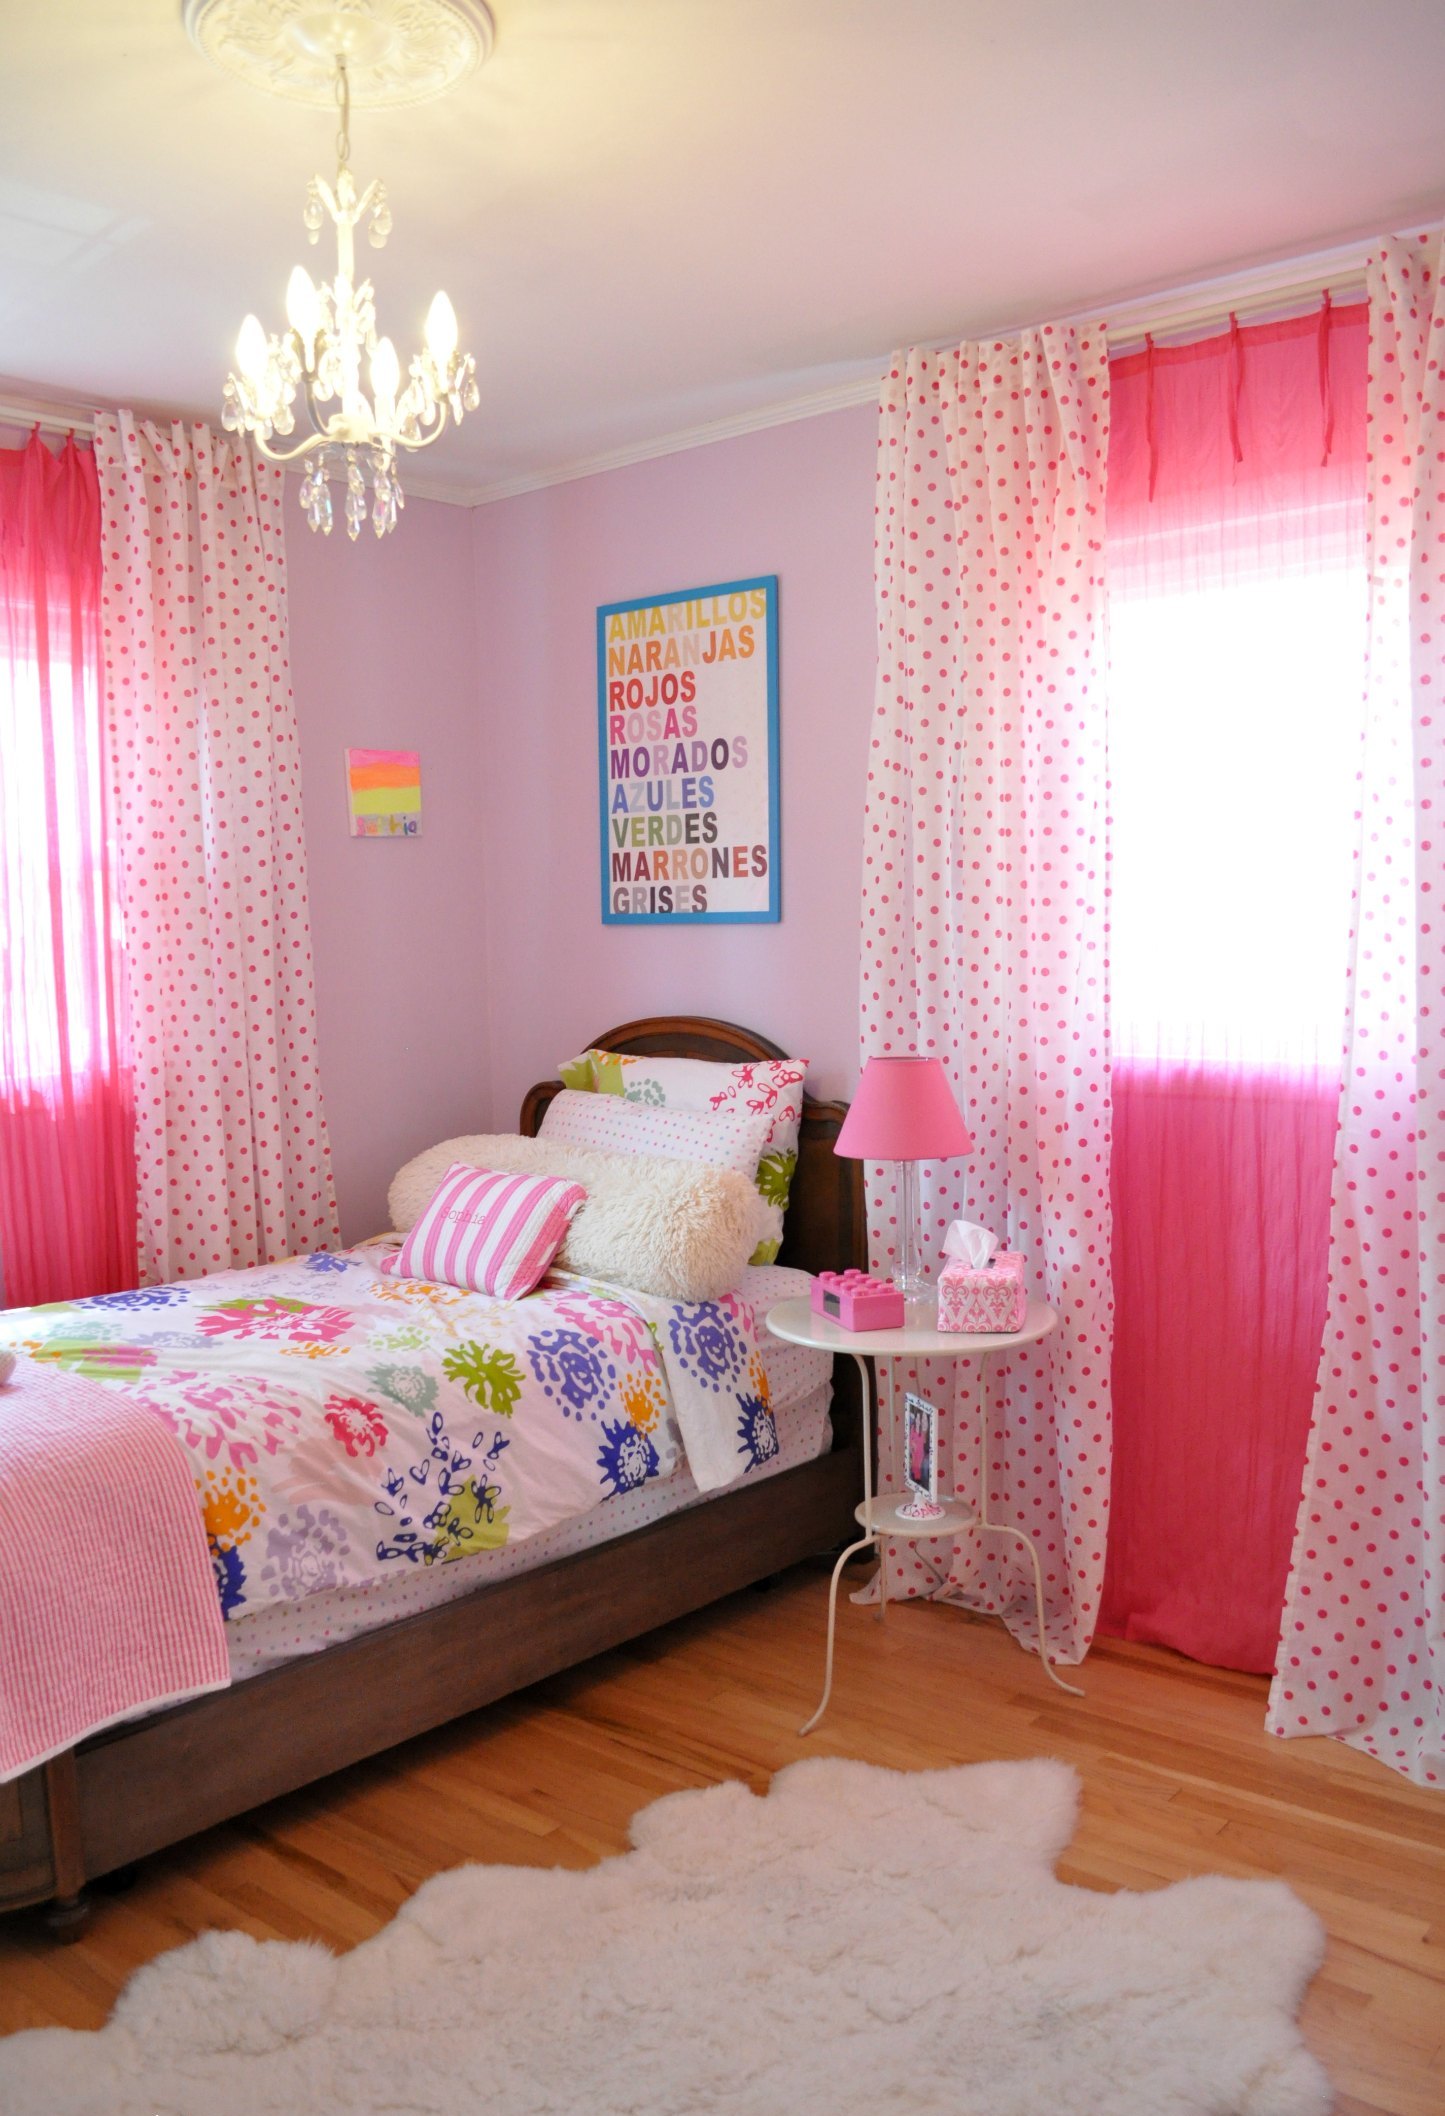 25 Creative Pink Bedroom Design Ideas - Decoration Love